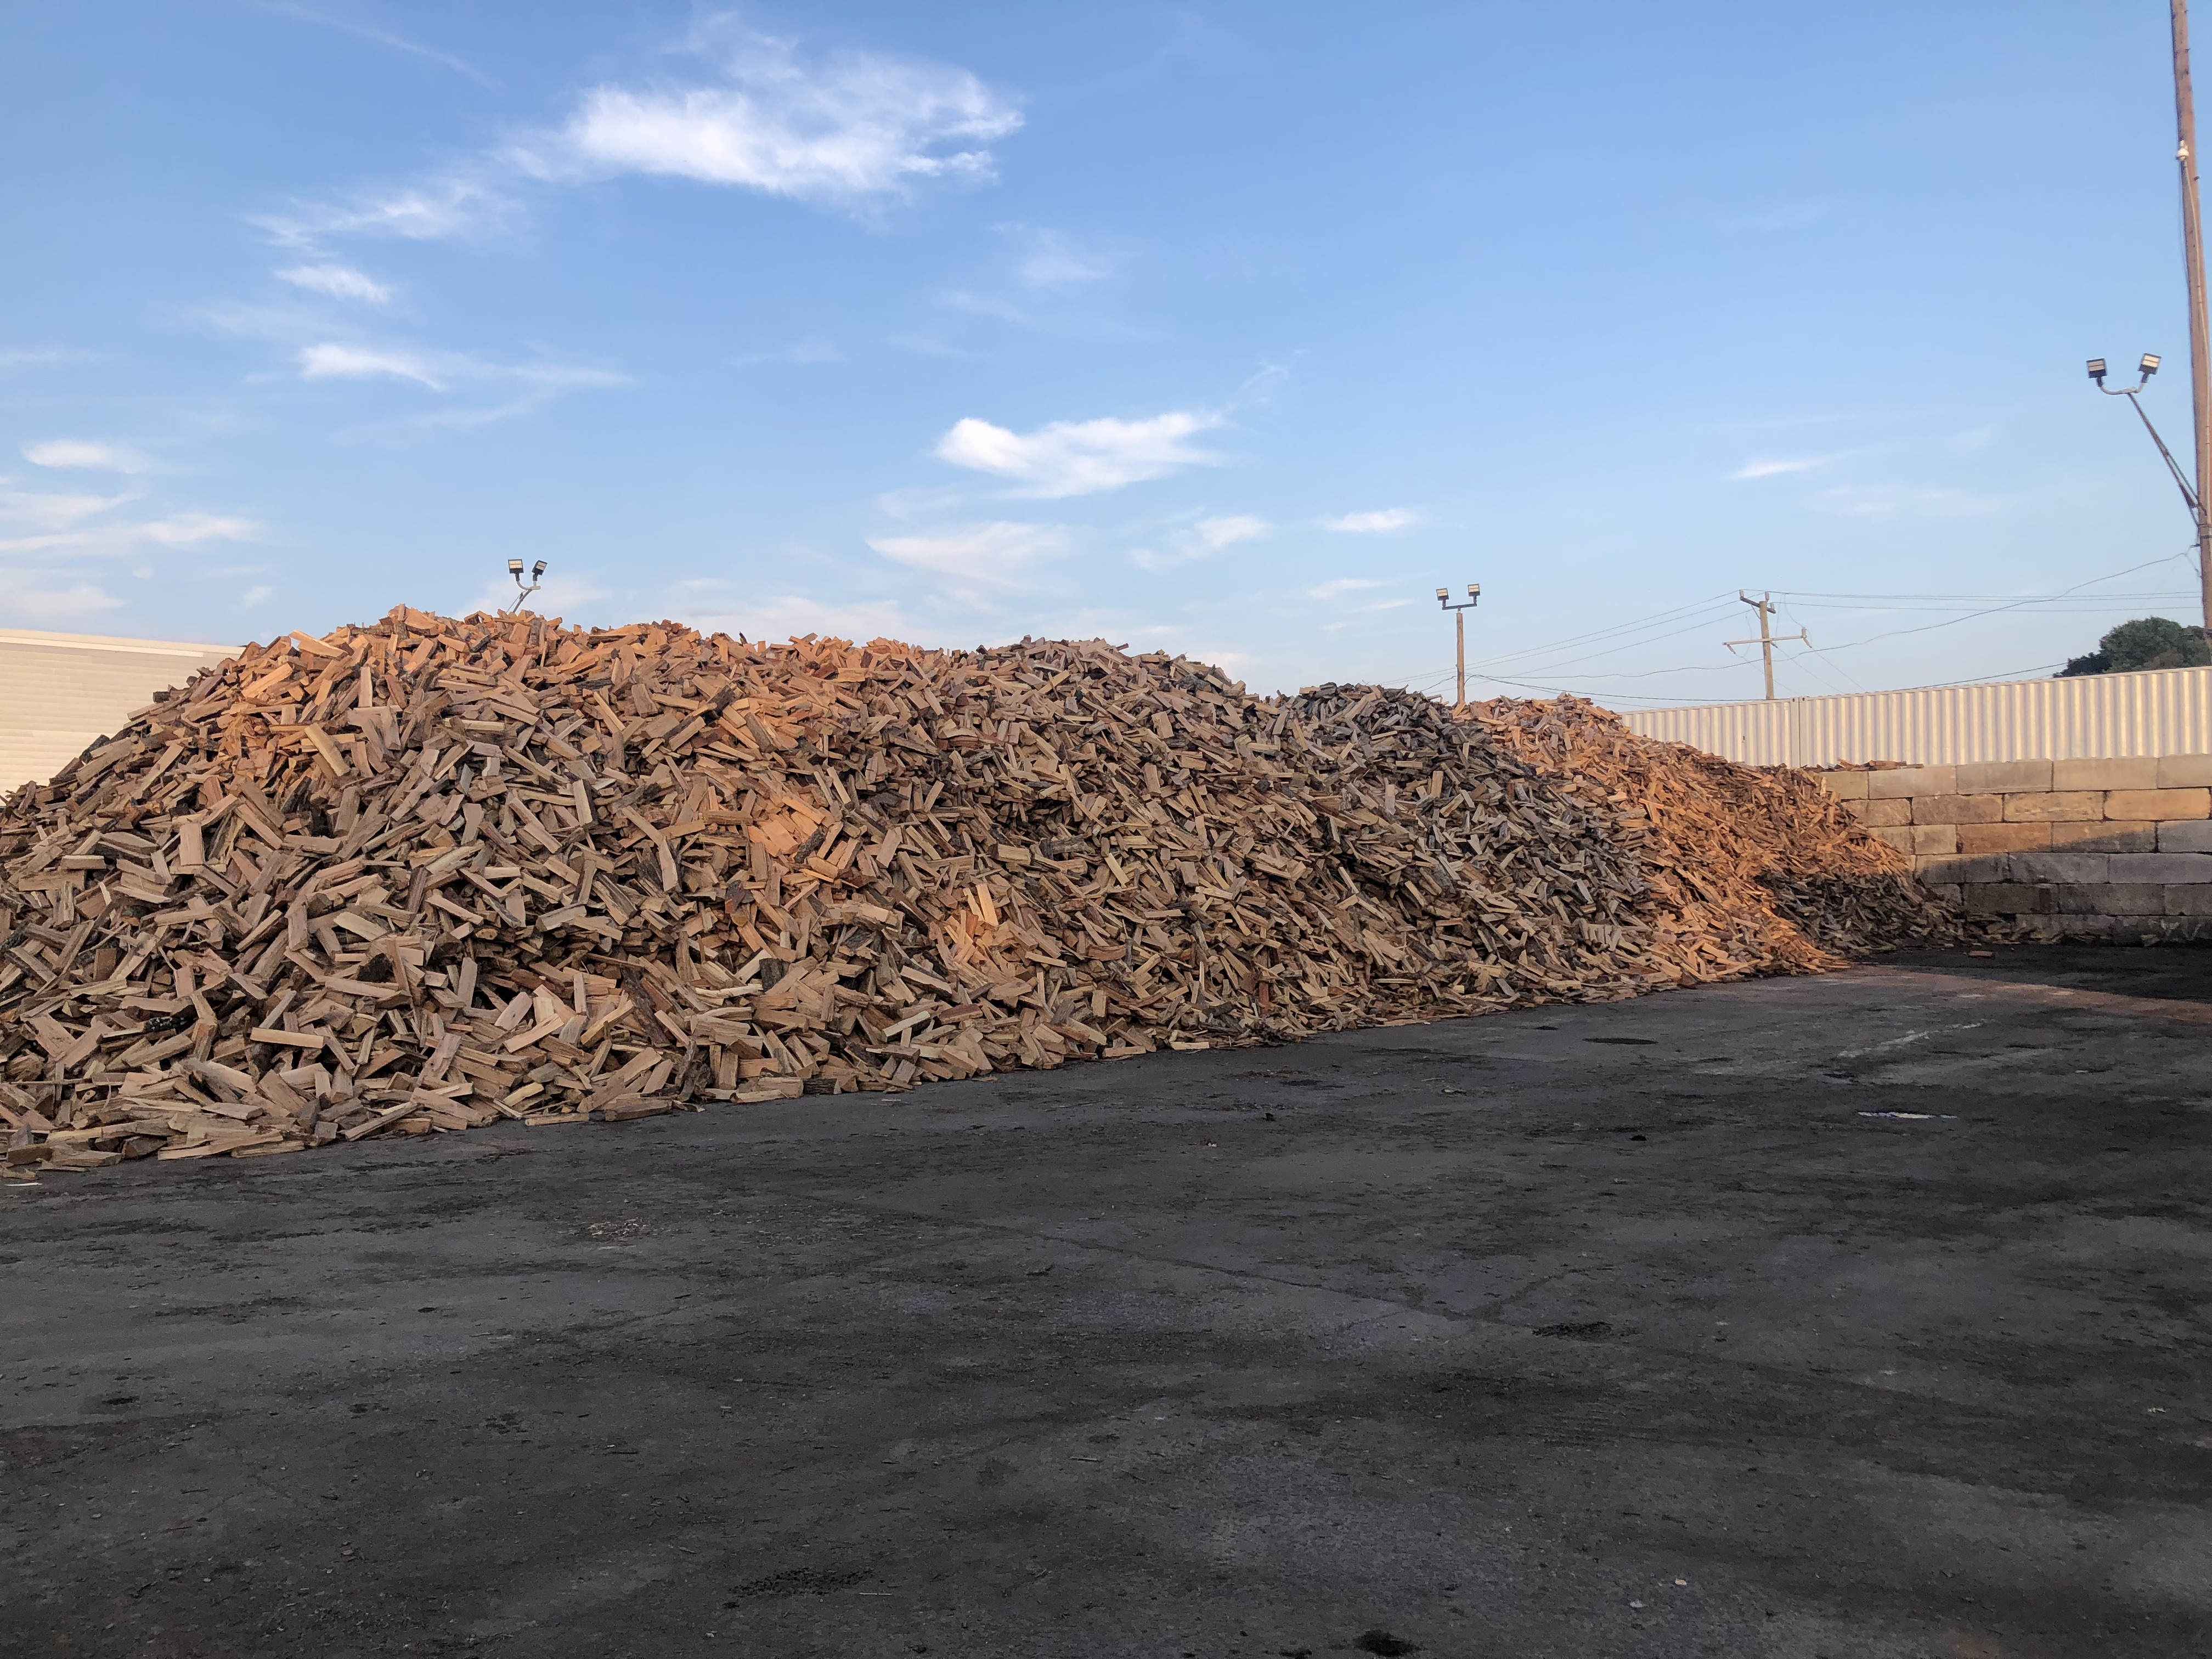 Kiln-Dried Firewood- Direct From Remington Mulch Company's Logyard